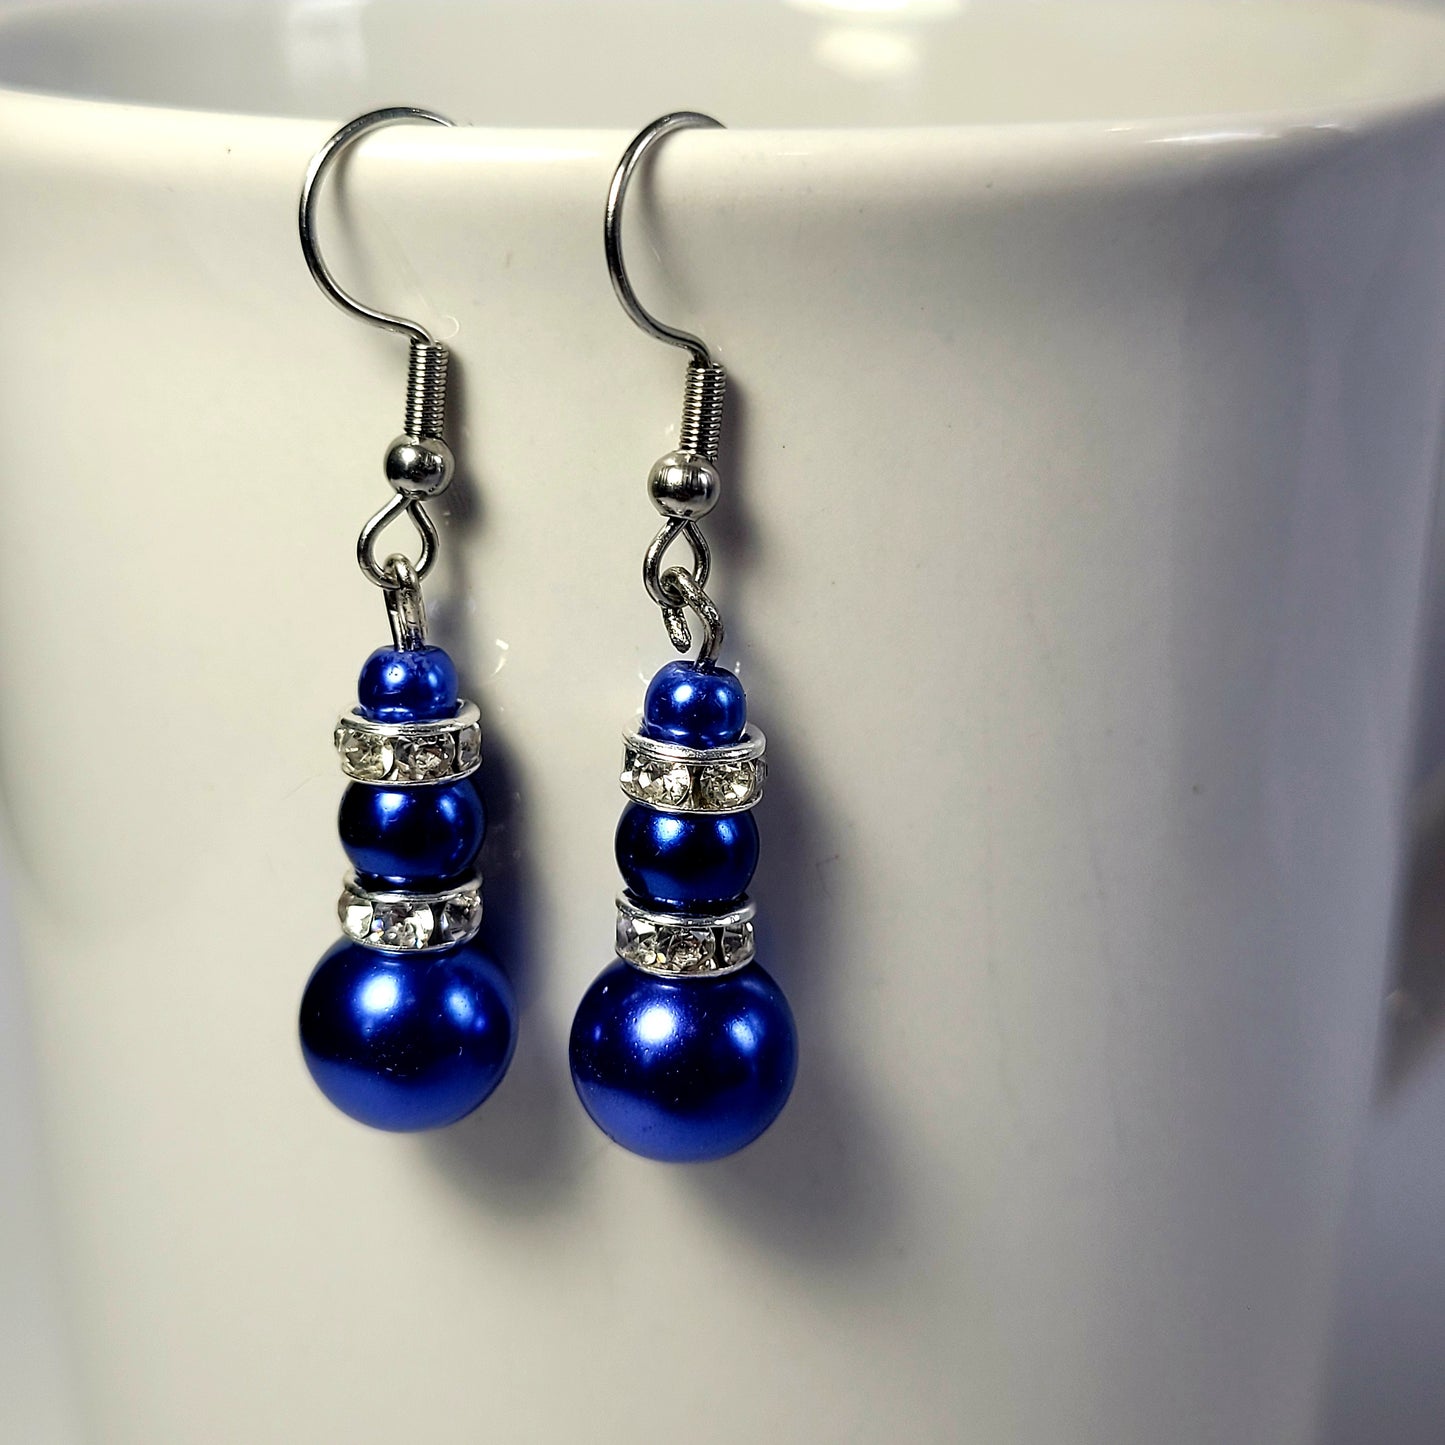 Earrings, blue beads with diamonds